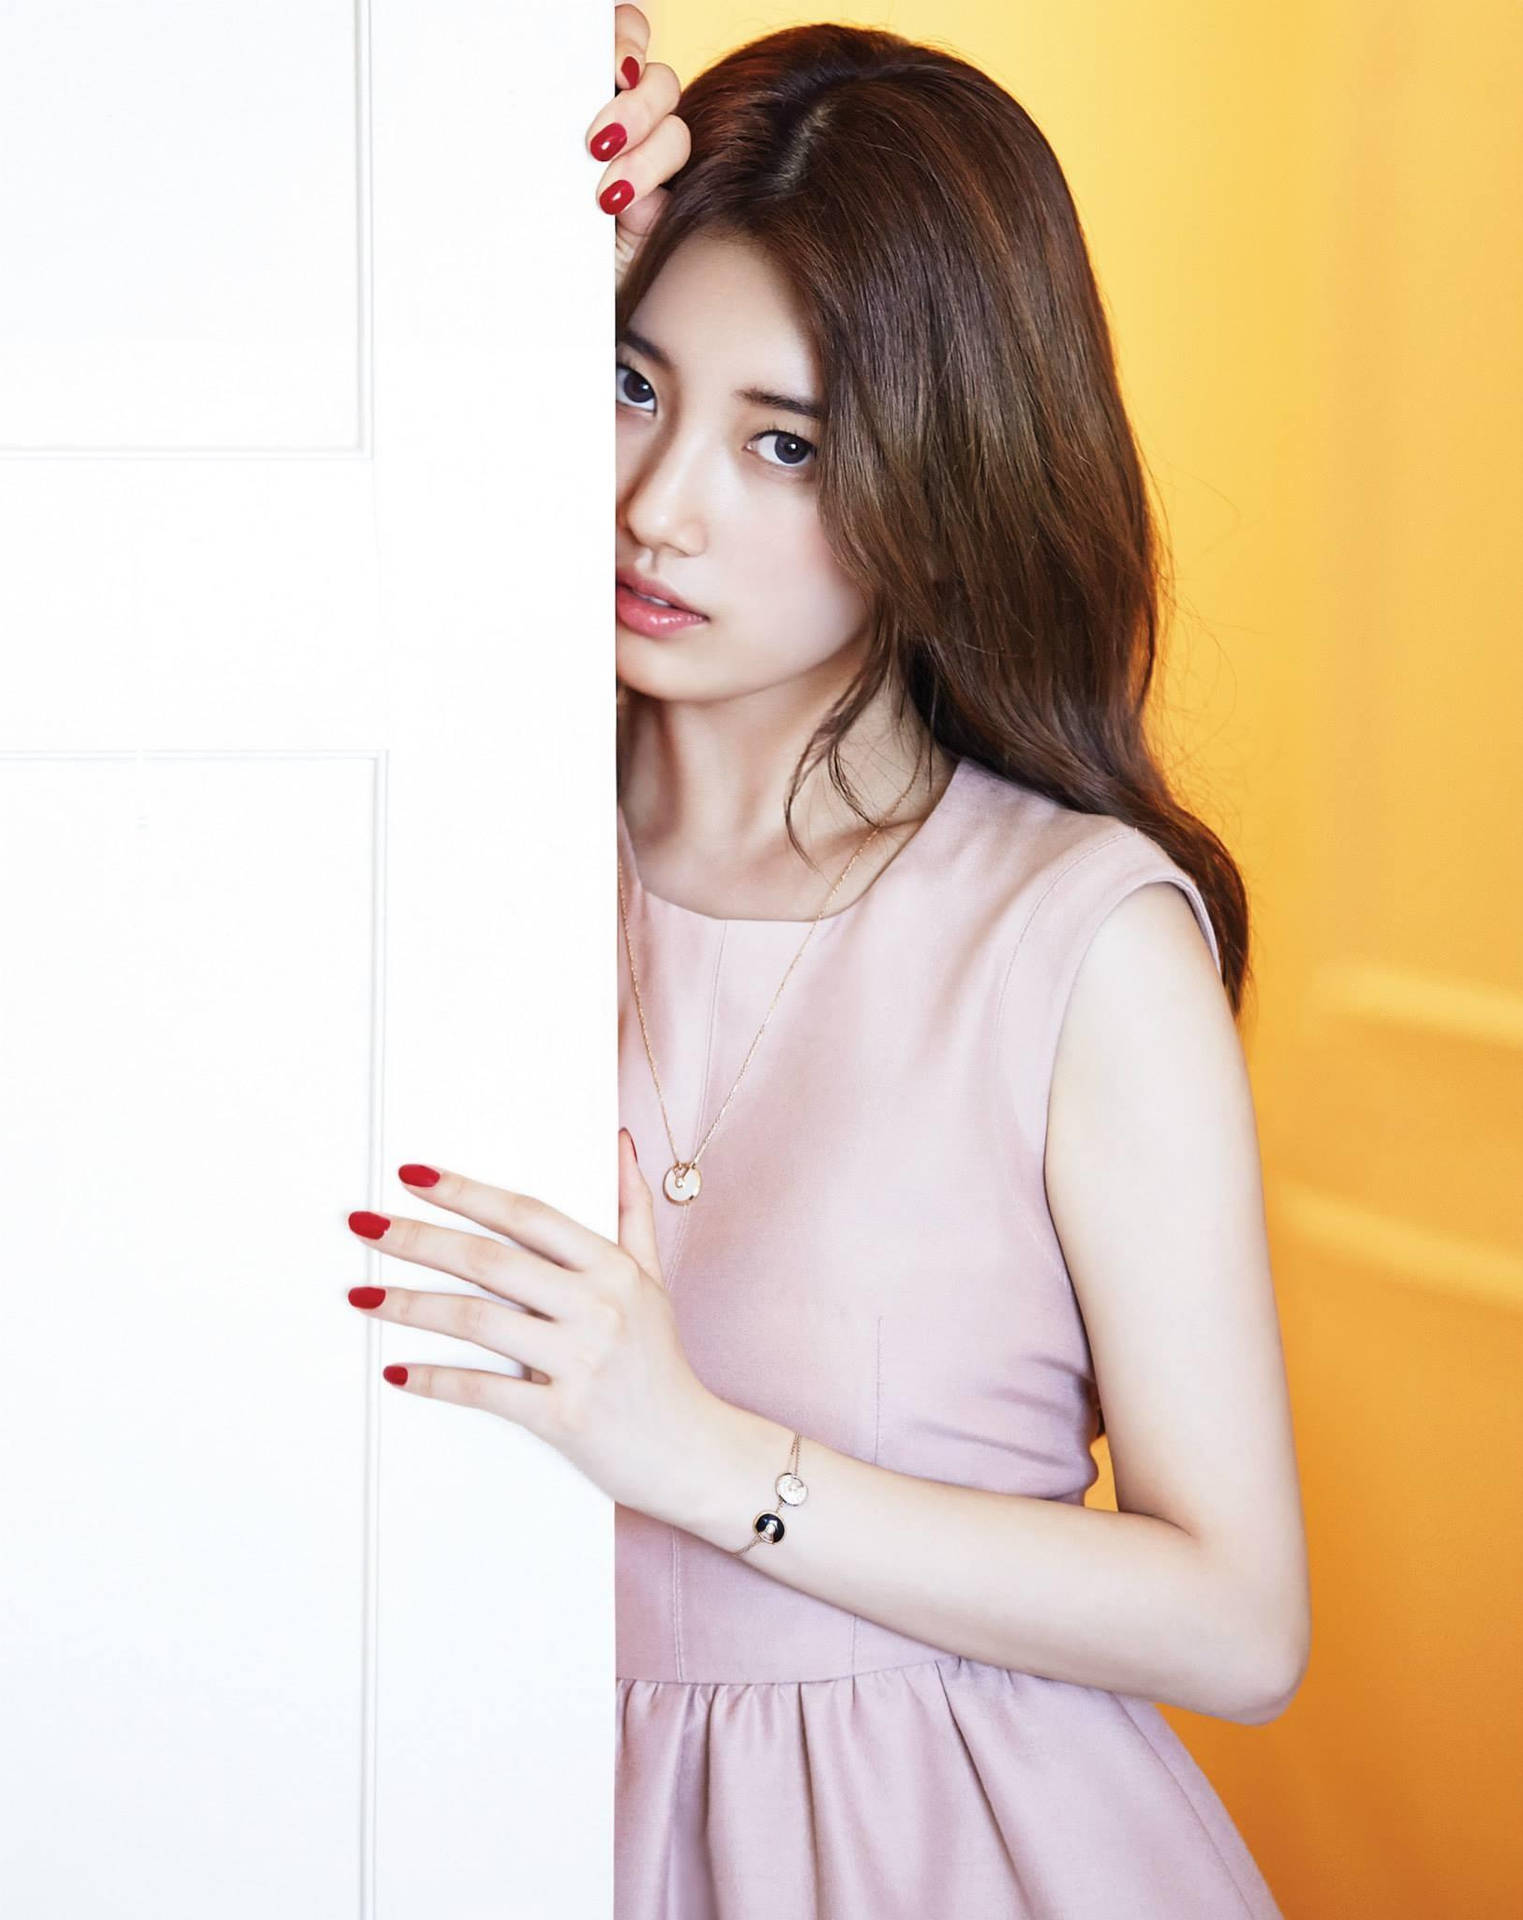 Bae Suzy In Pink Dress Wallpaper